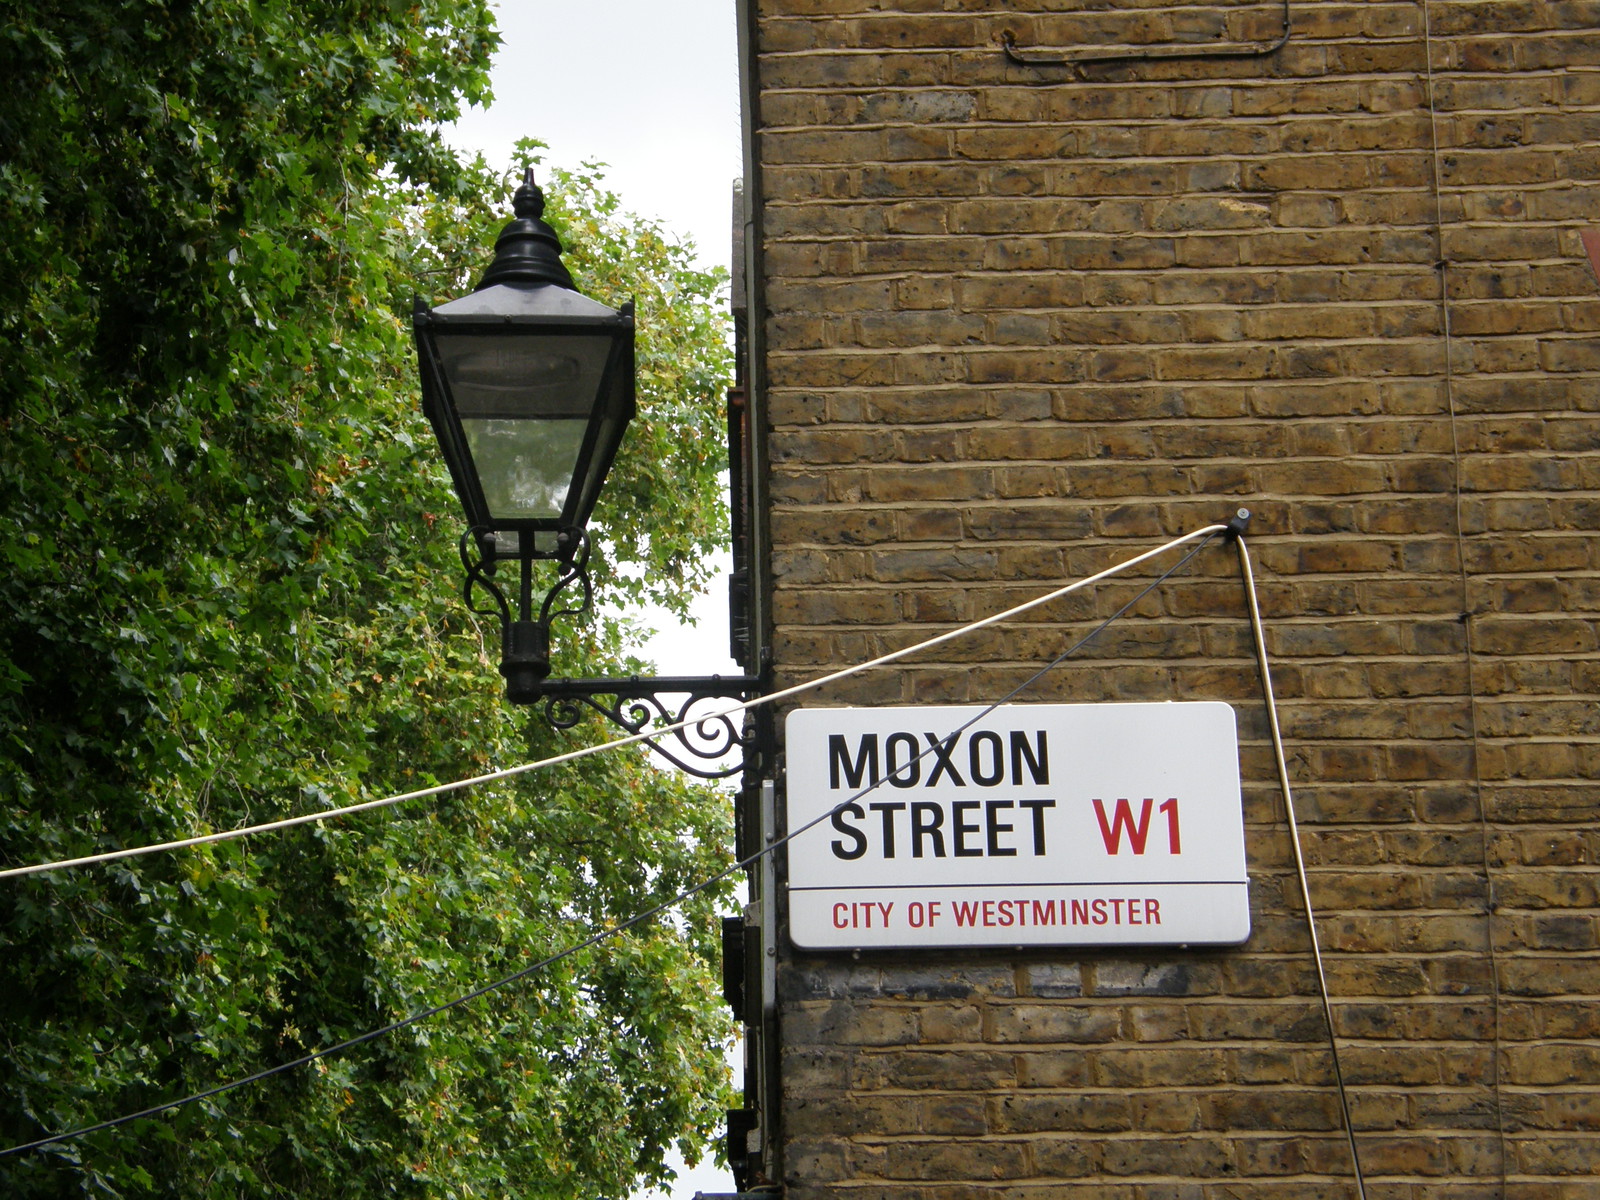 Moxon Street